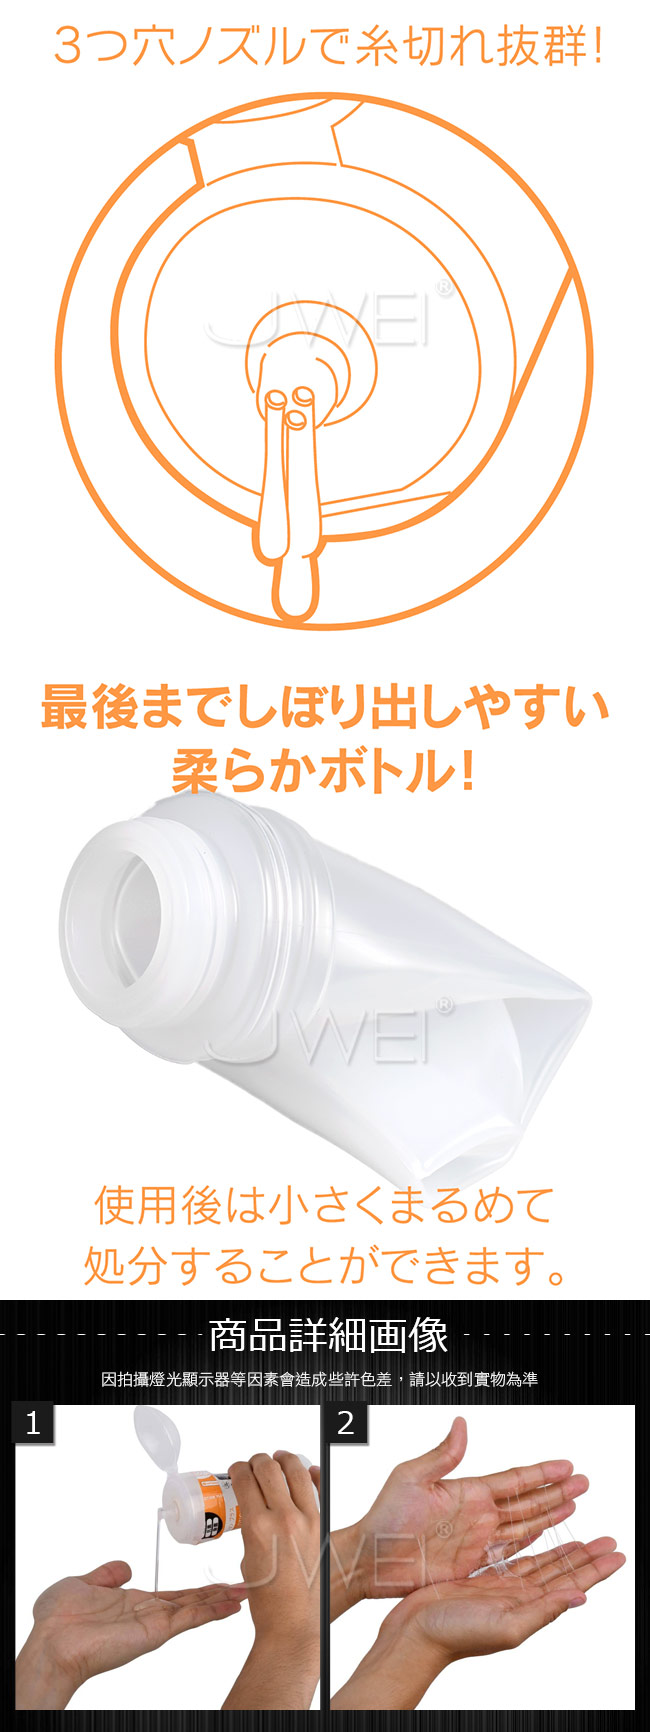 日本原裝進口EXE．EXCELLENT LOTION PLUS Ag+抗菌溫感型潤滑液-150ml